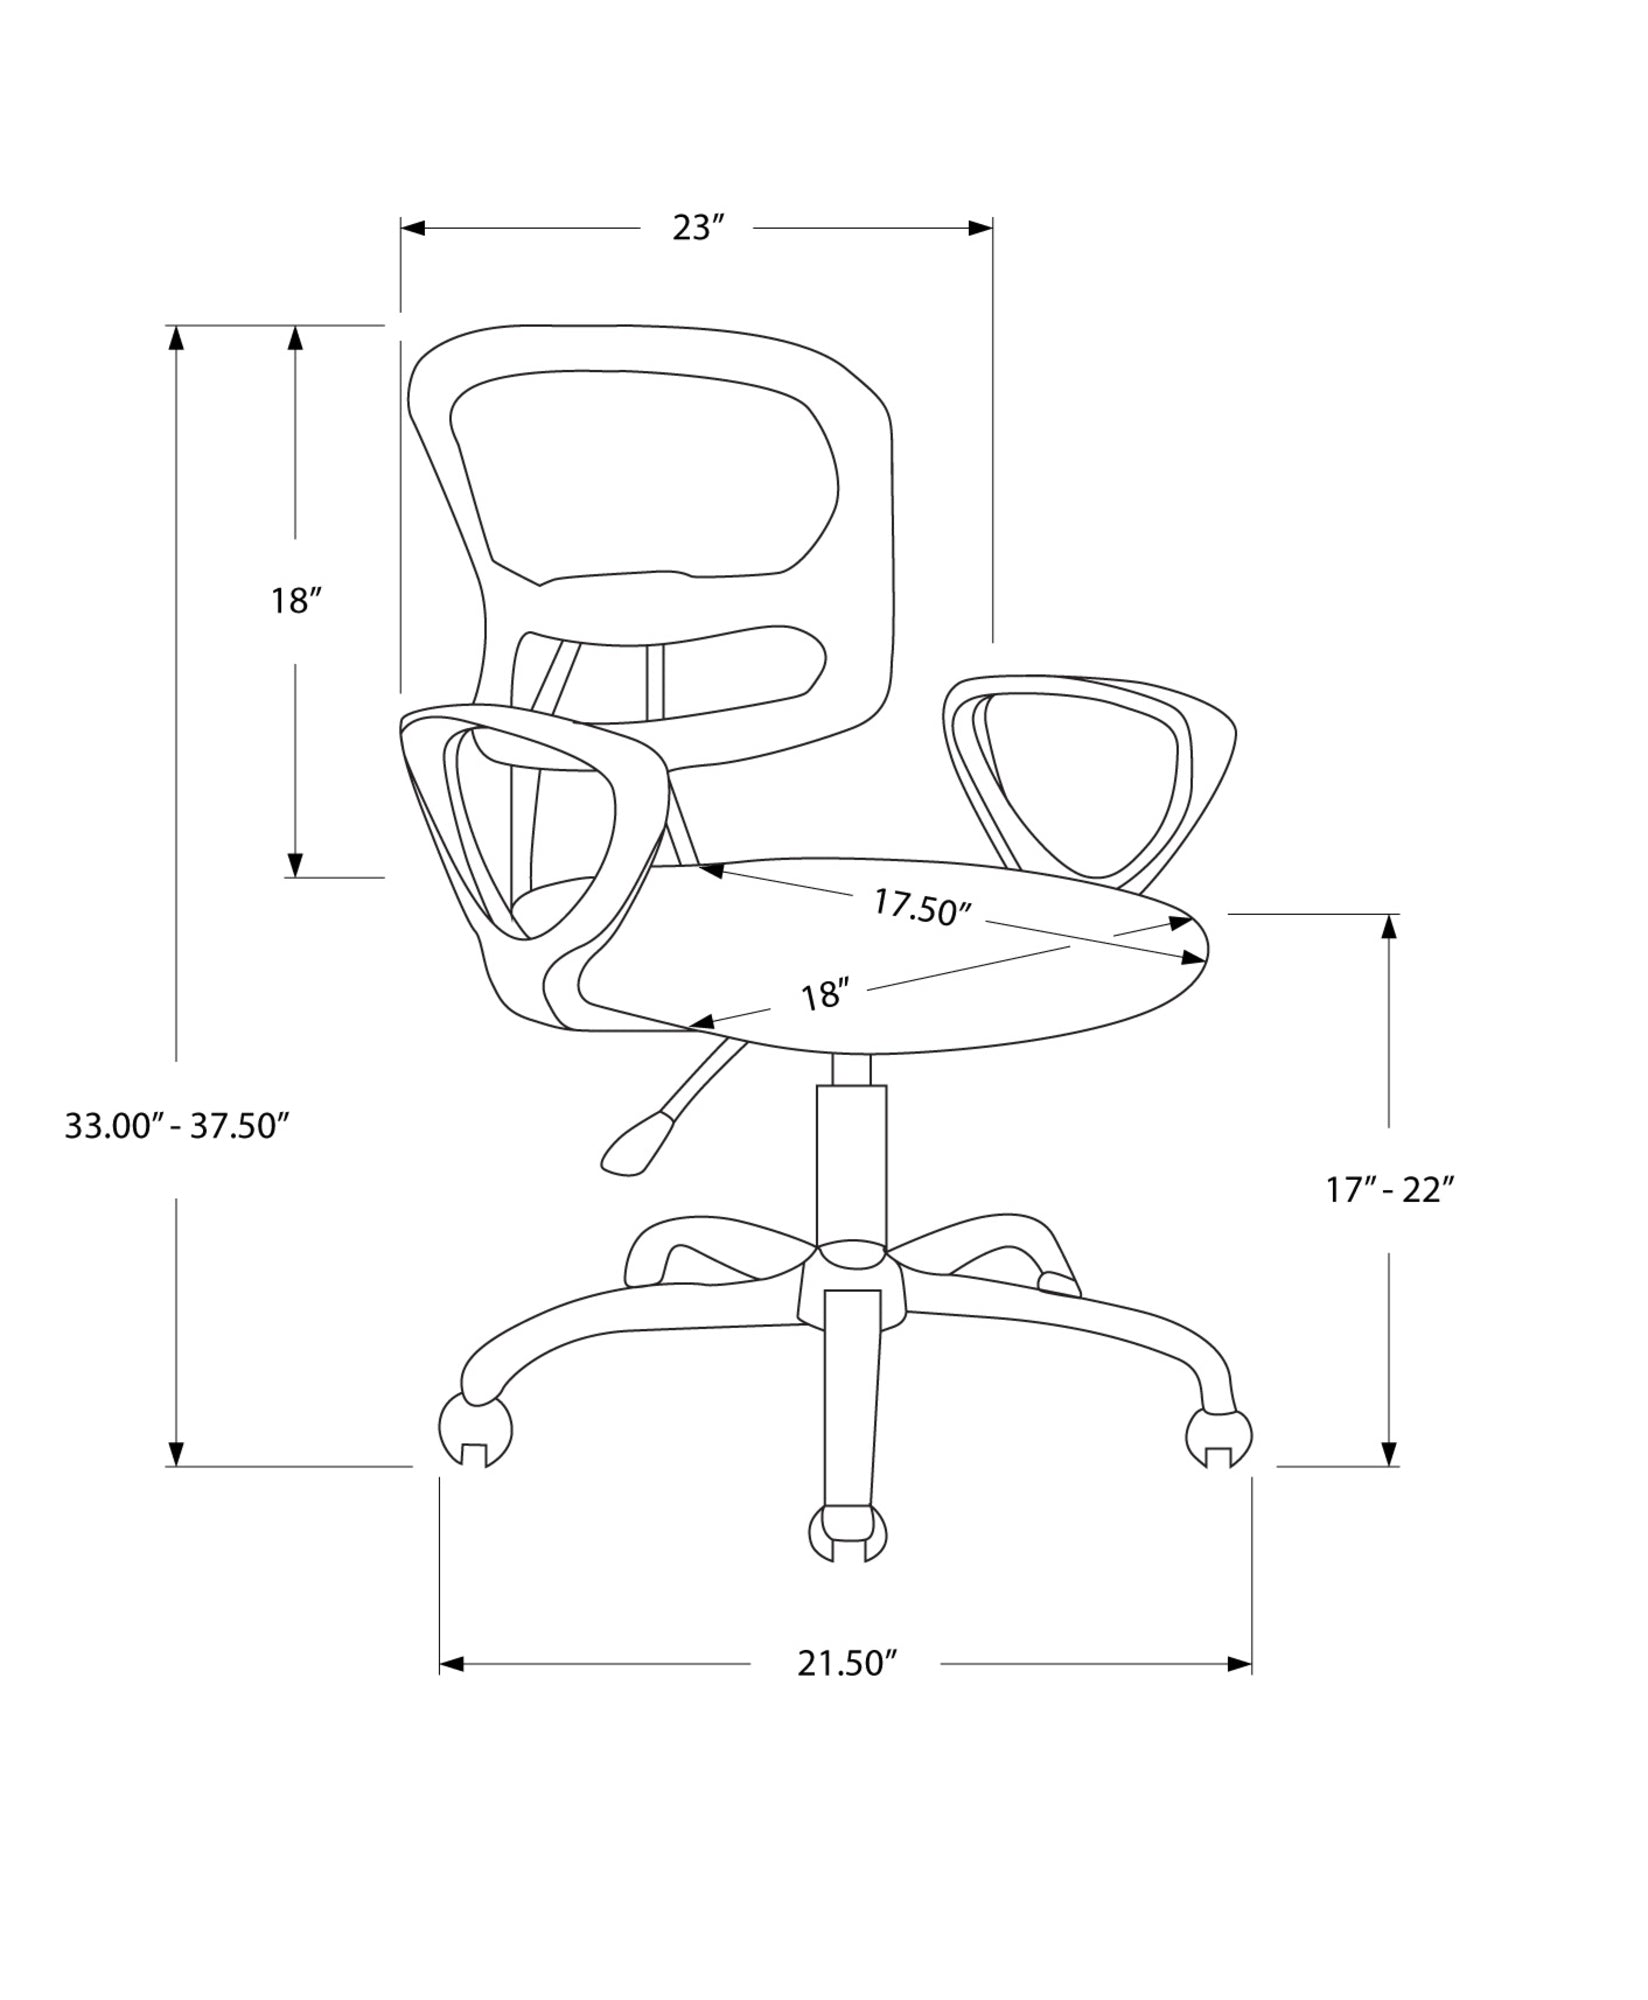 Office Chair - Black Mesh Juvenile / Multi-Position